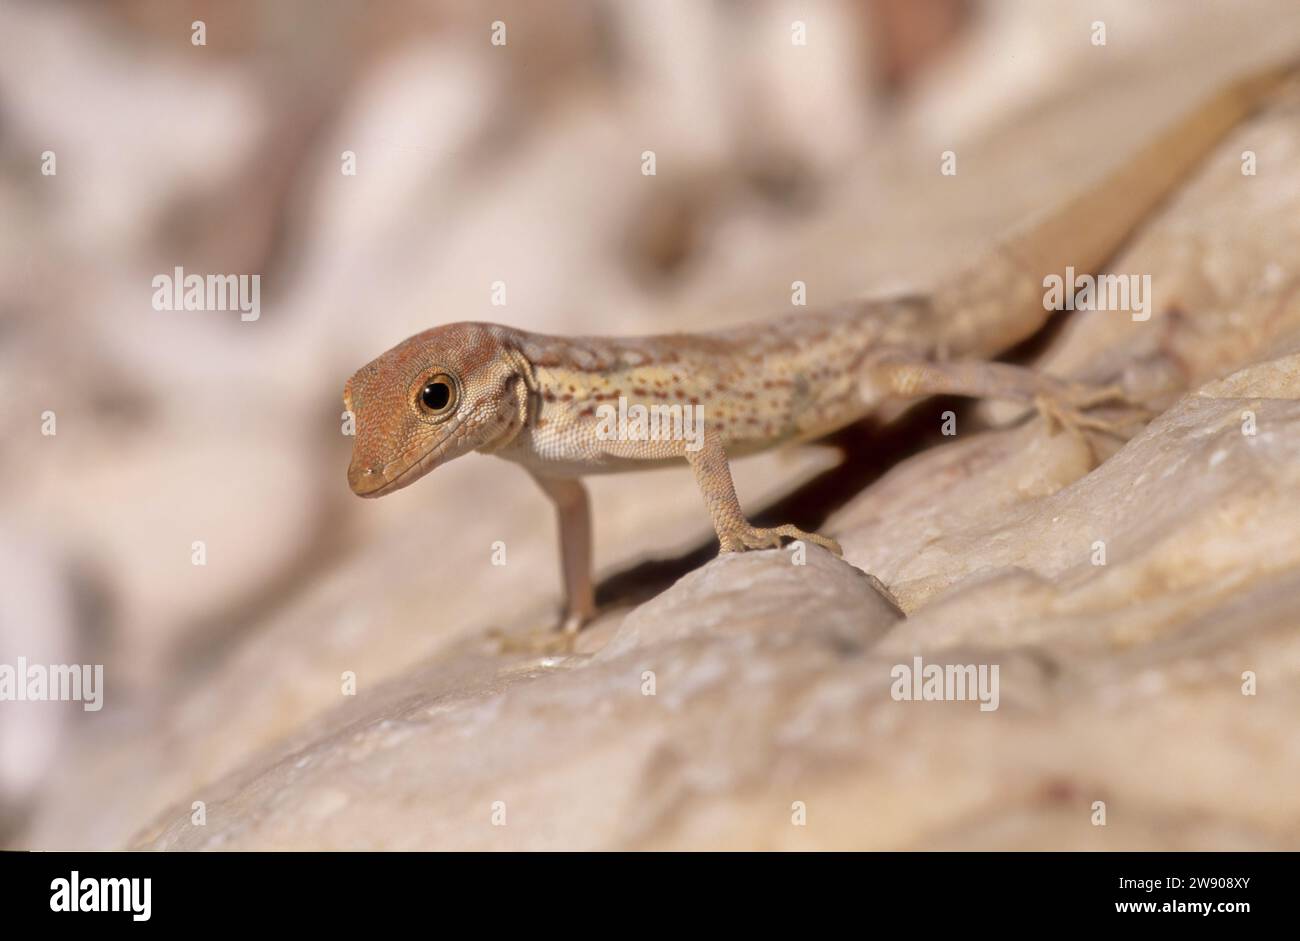 Pristurus samhaensis is a species of lizard in the Sphaerodactylidae family found on Samhah and Darsah islands. Stock Photo